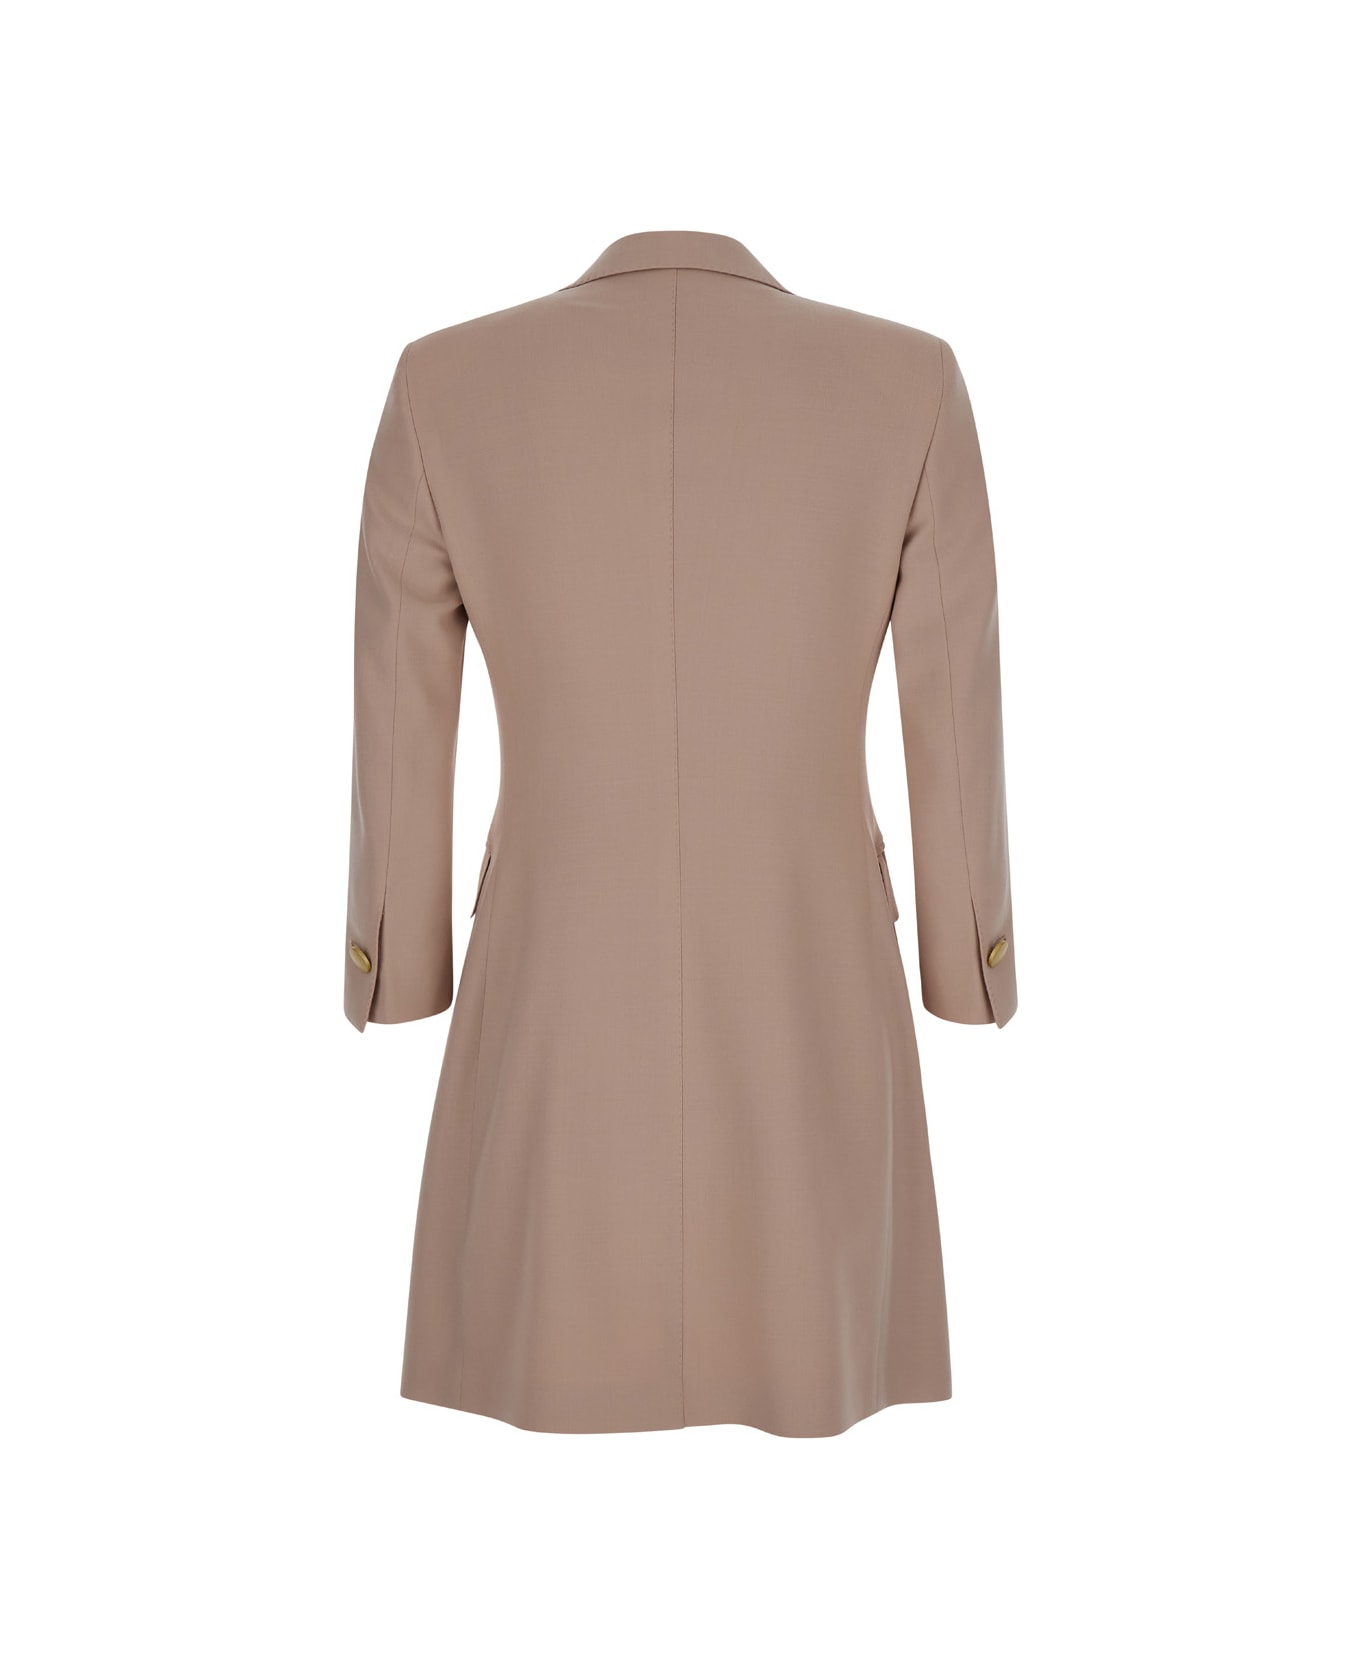 Tagliatore Beige Blazer Dress With Buttons In Wool Blend Stretch Woman - Beige レインコート